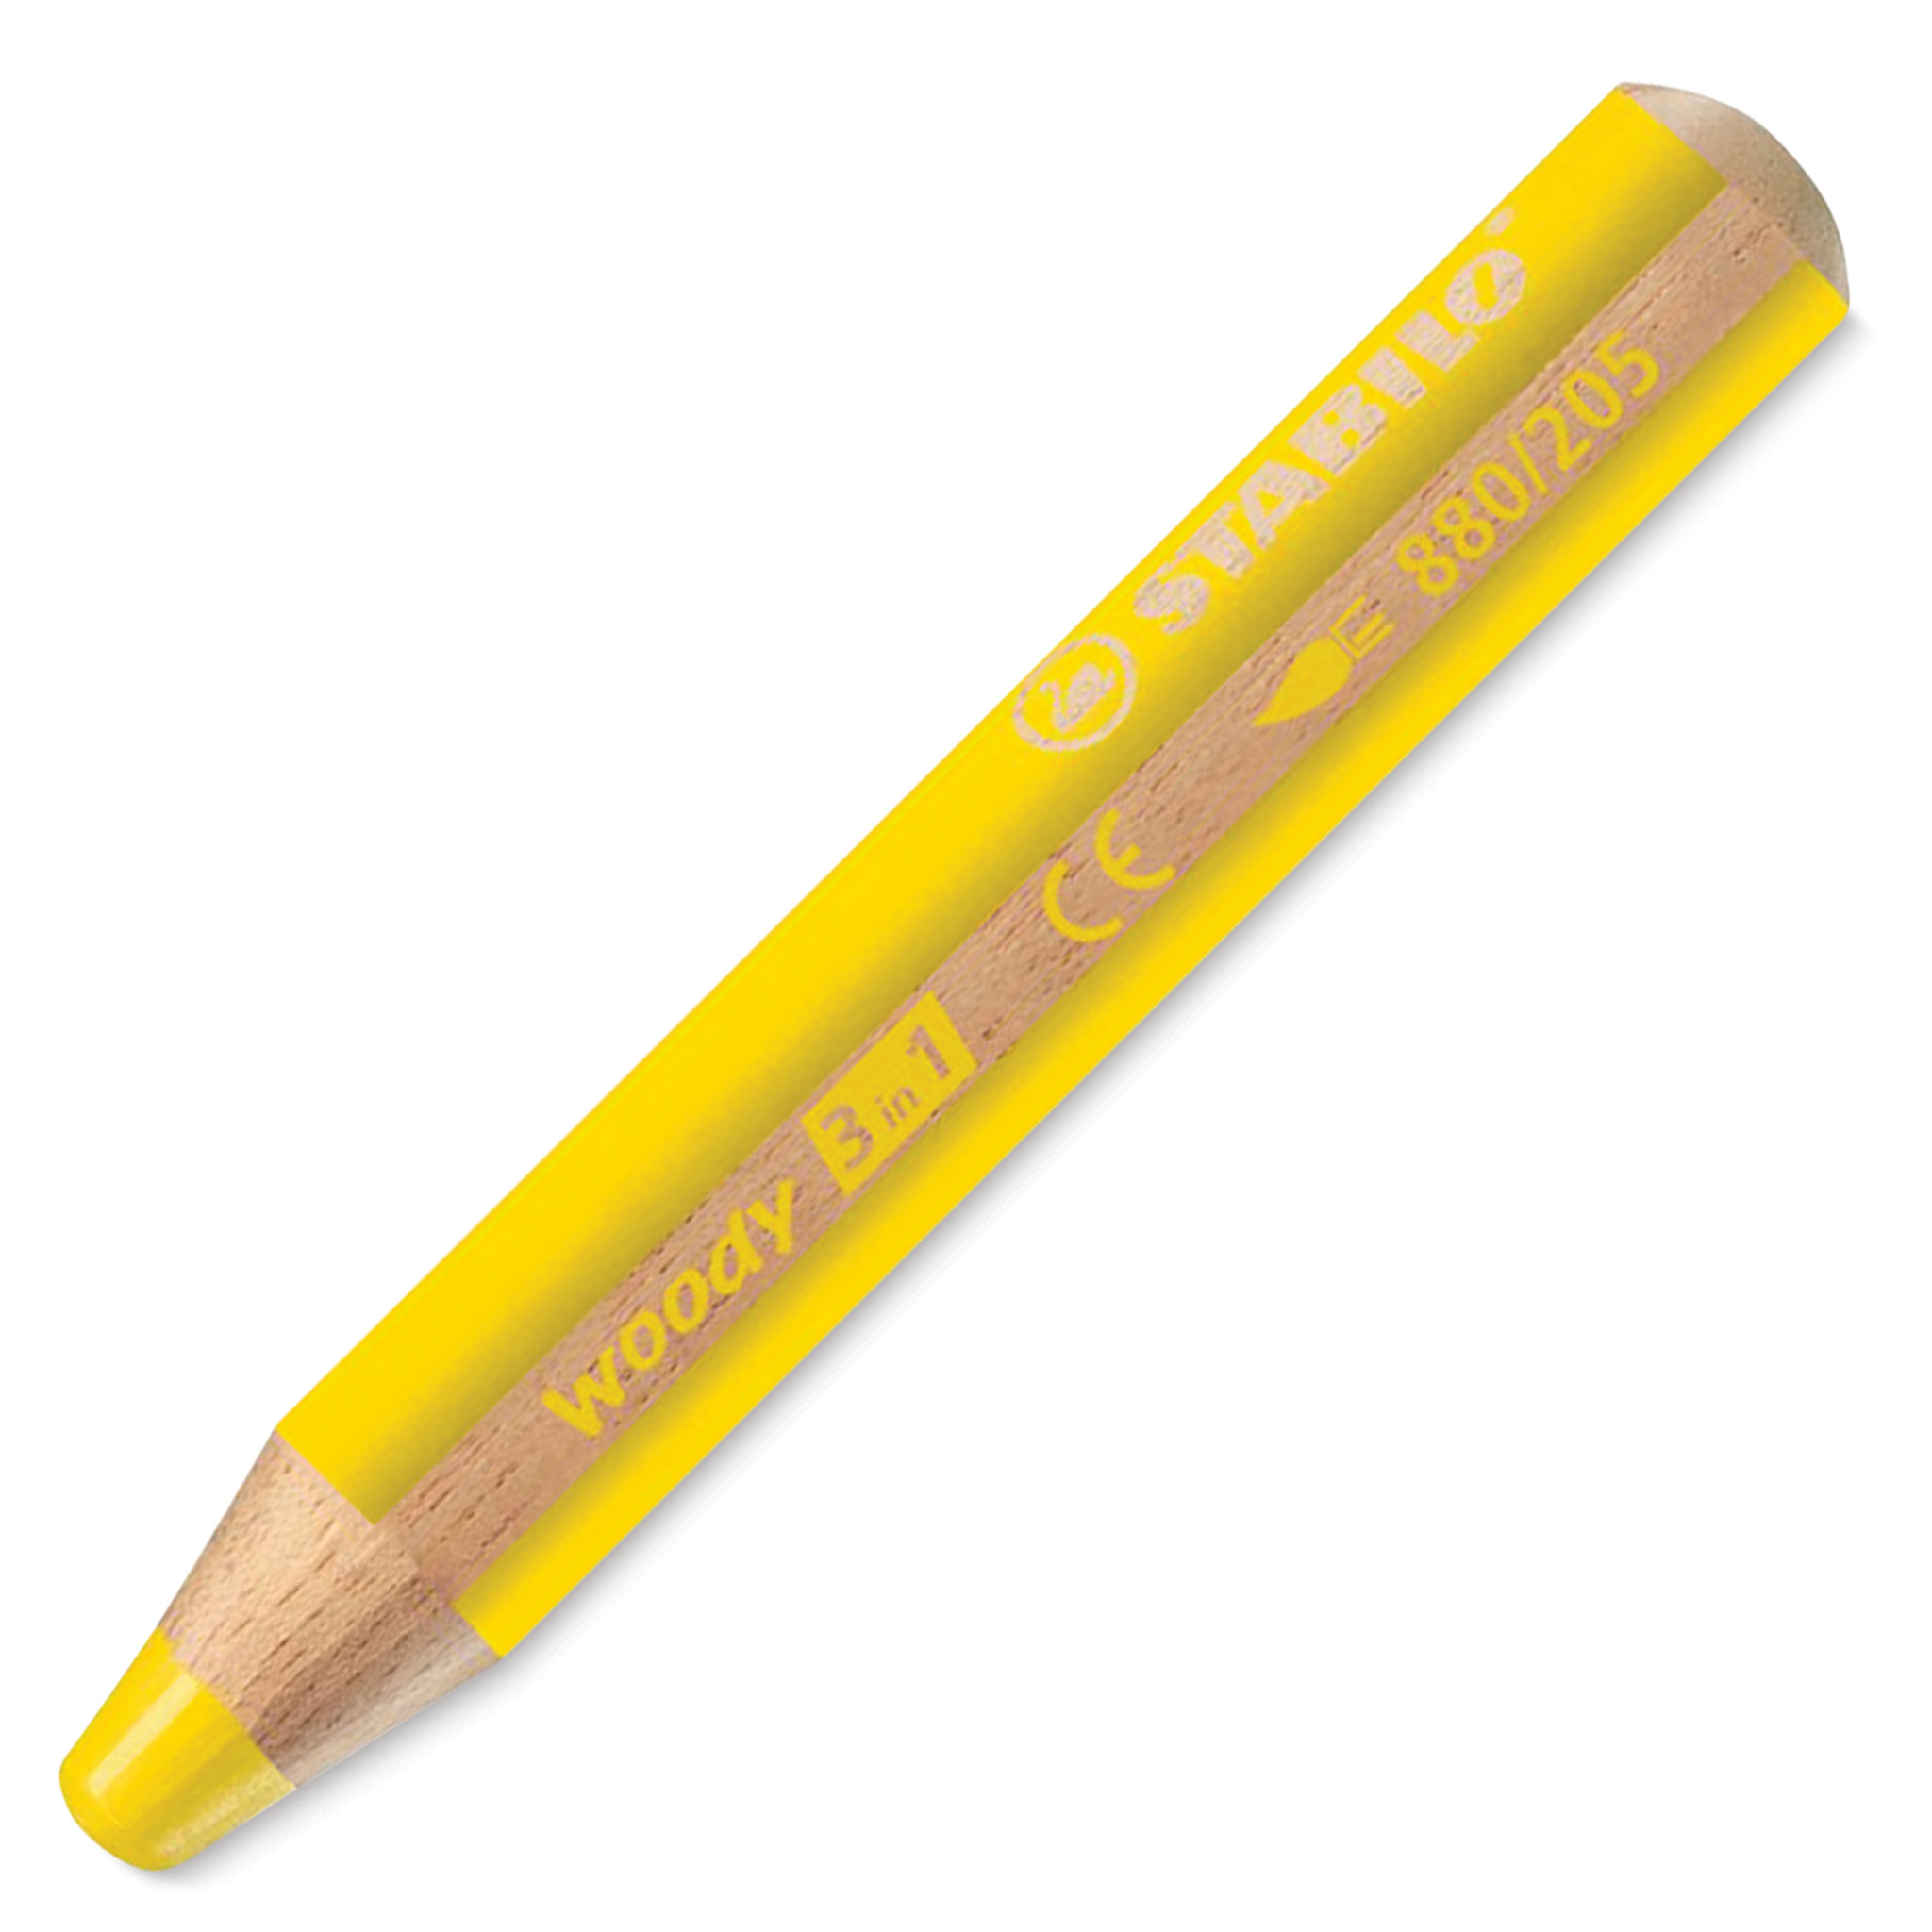 Stabilo Woody 3 in 1 Pencils - Assorted, Set of 18